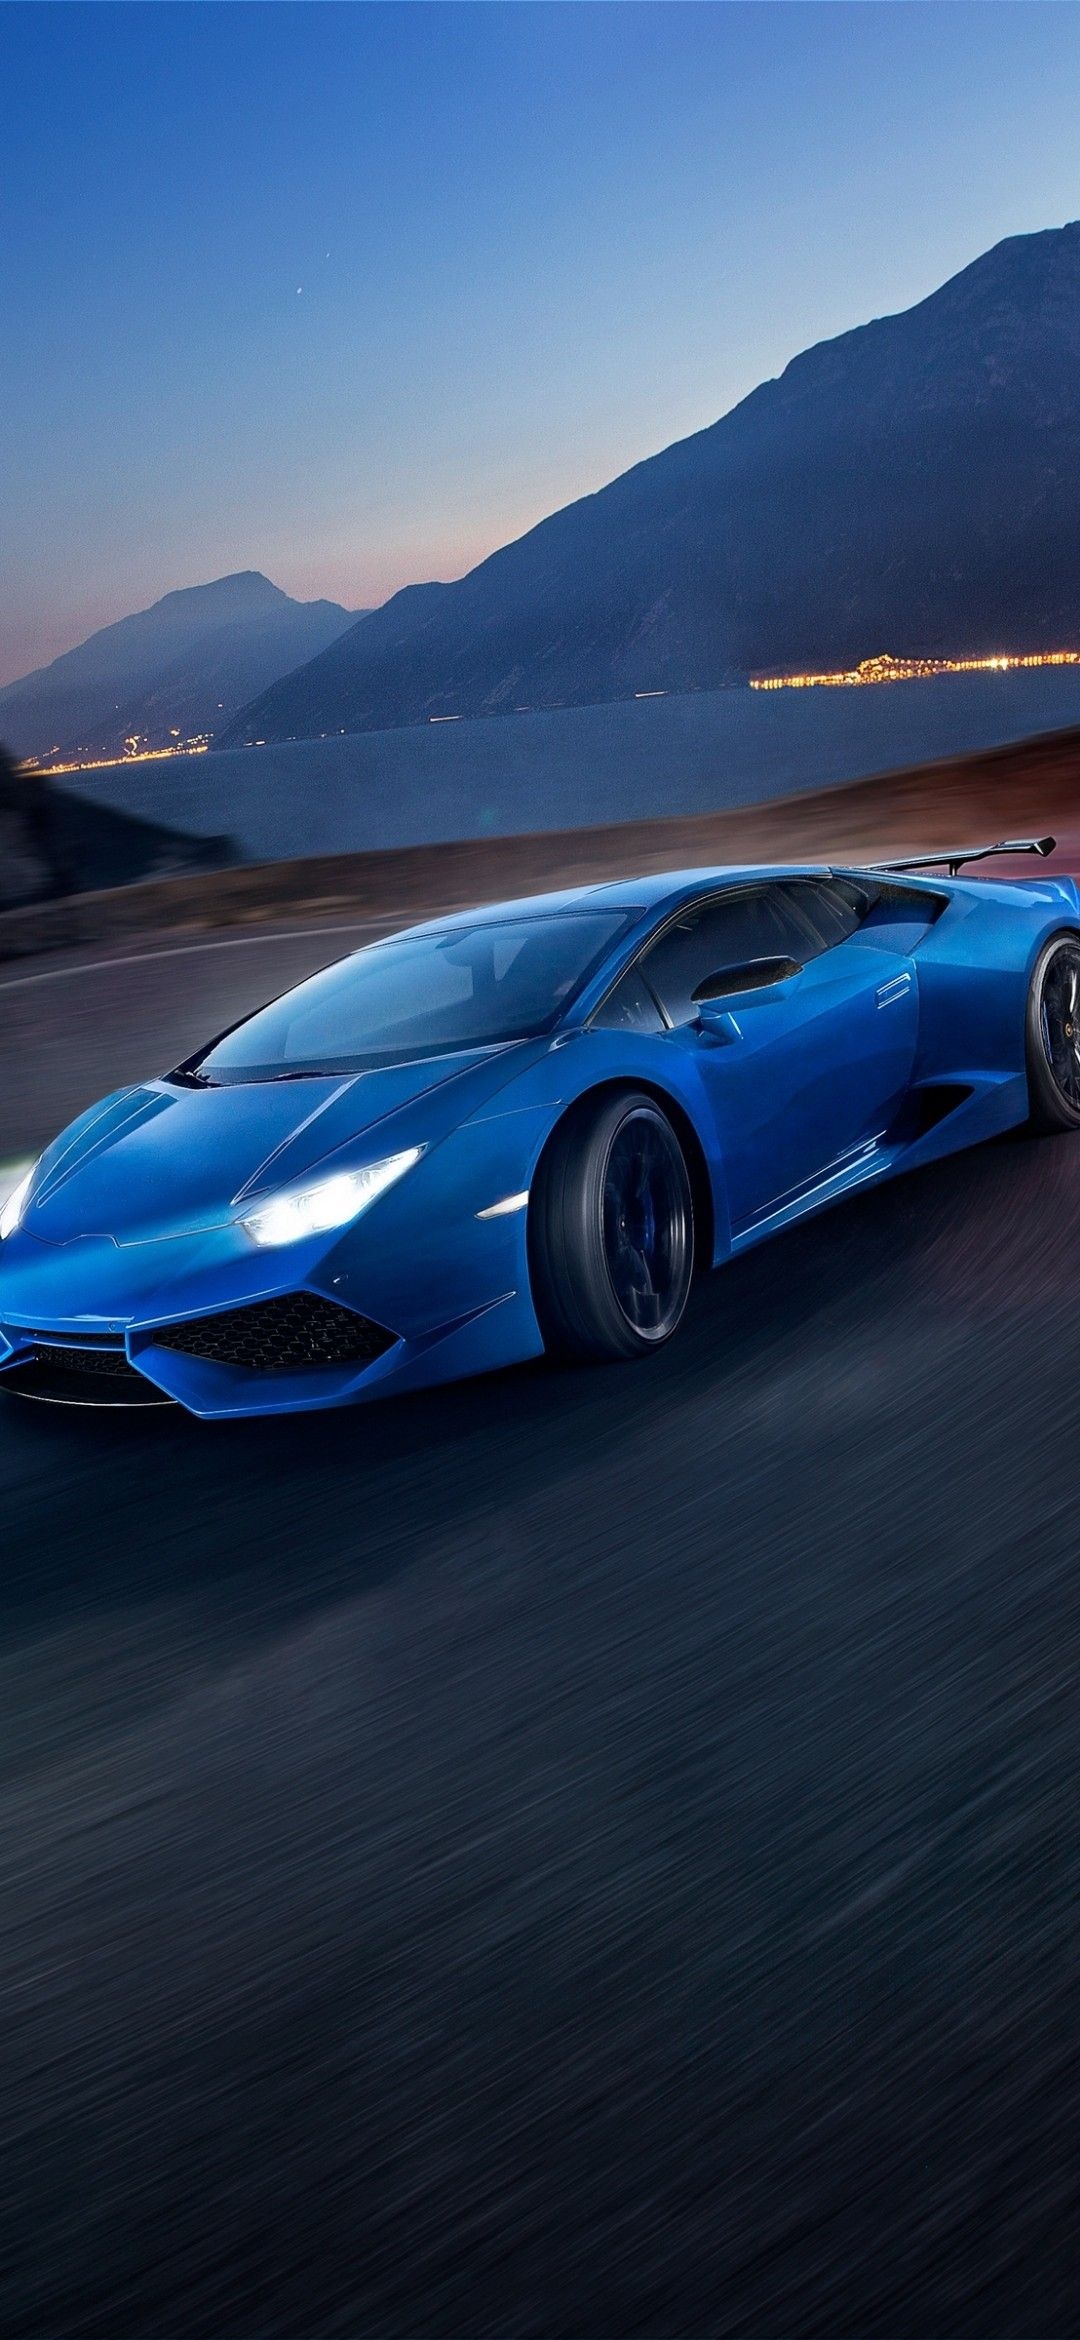 Lamborghini Huracan, Blue beast, Exquisite craftsmanship, Sports car elegance, 1080x2340 HD Handy